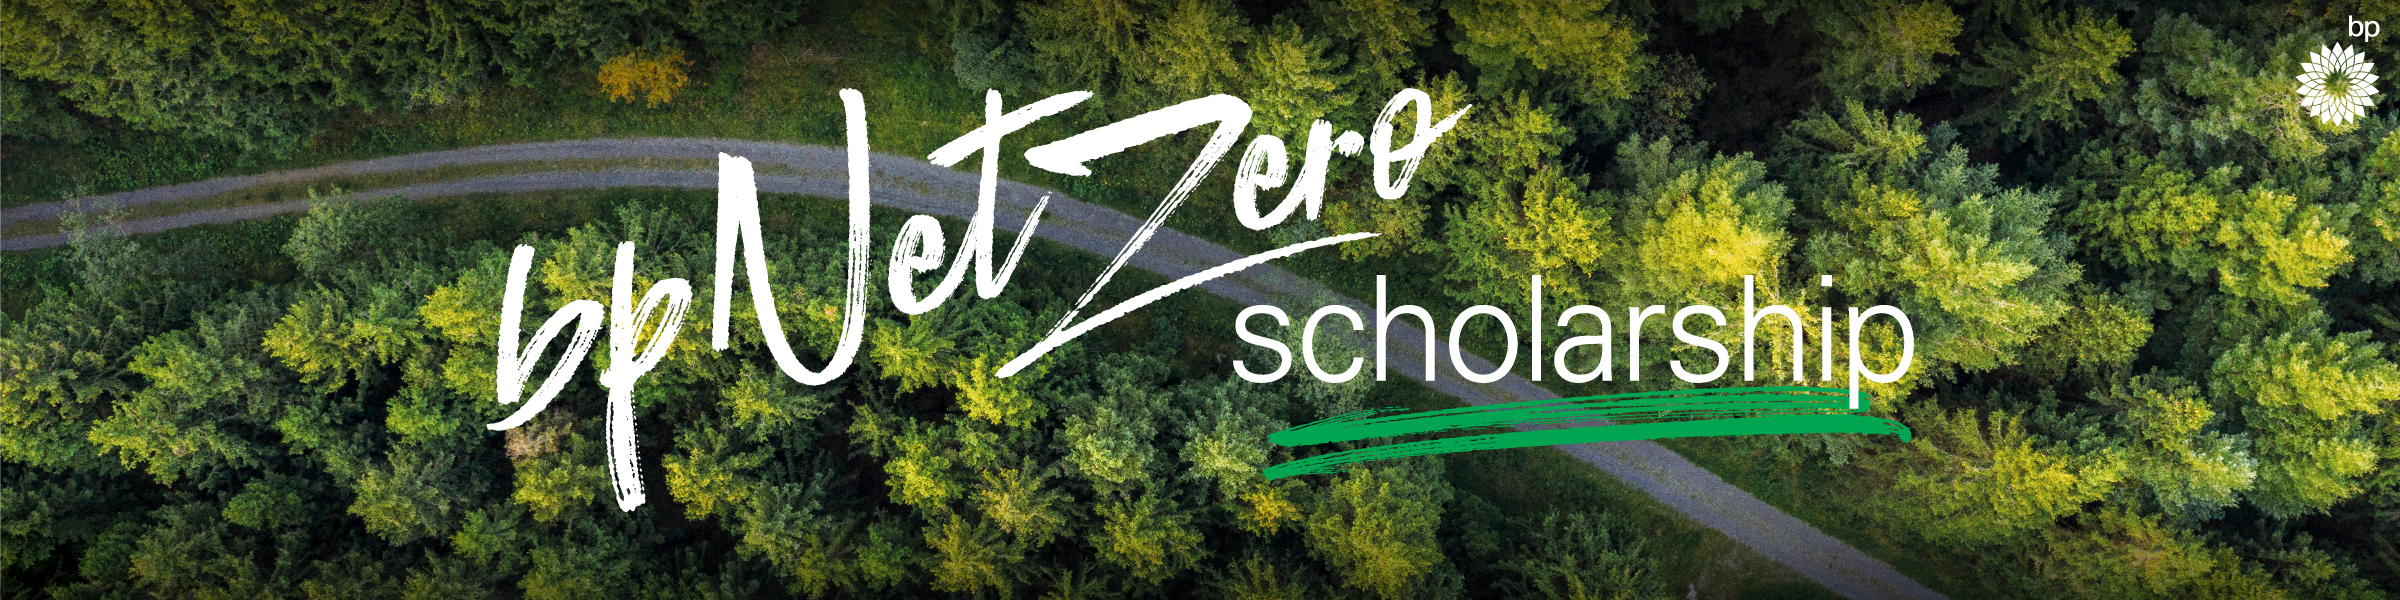 Net Zero Scholarship Banner Image